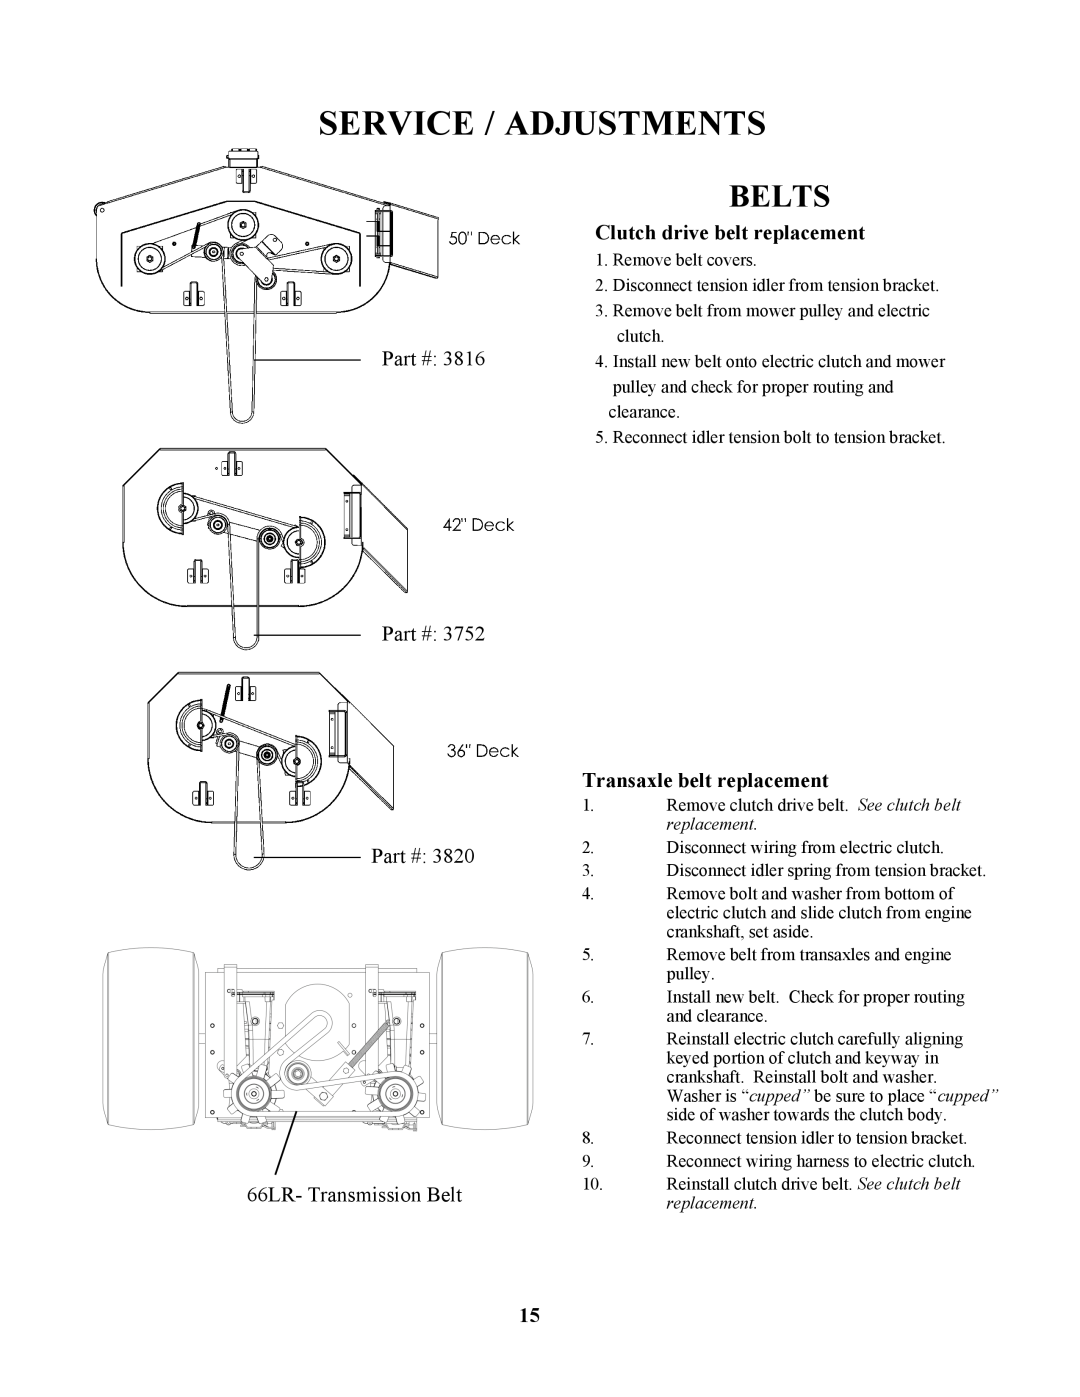 Swisher ZT1842 manual Belts, Service / Adjustments, 3816 3752 3820 66LR- Transmission Belt, Clutch drive belt replacement 